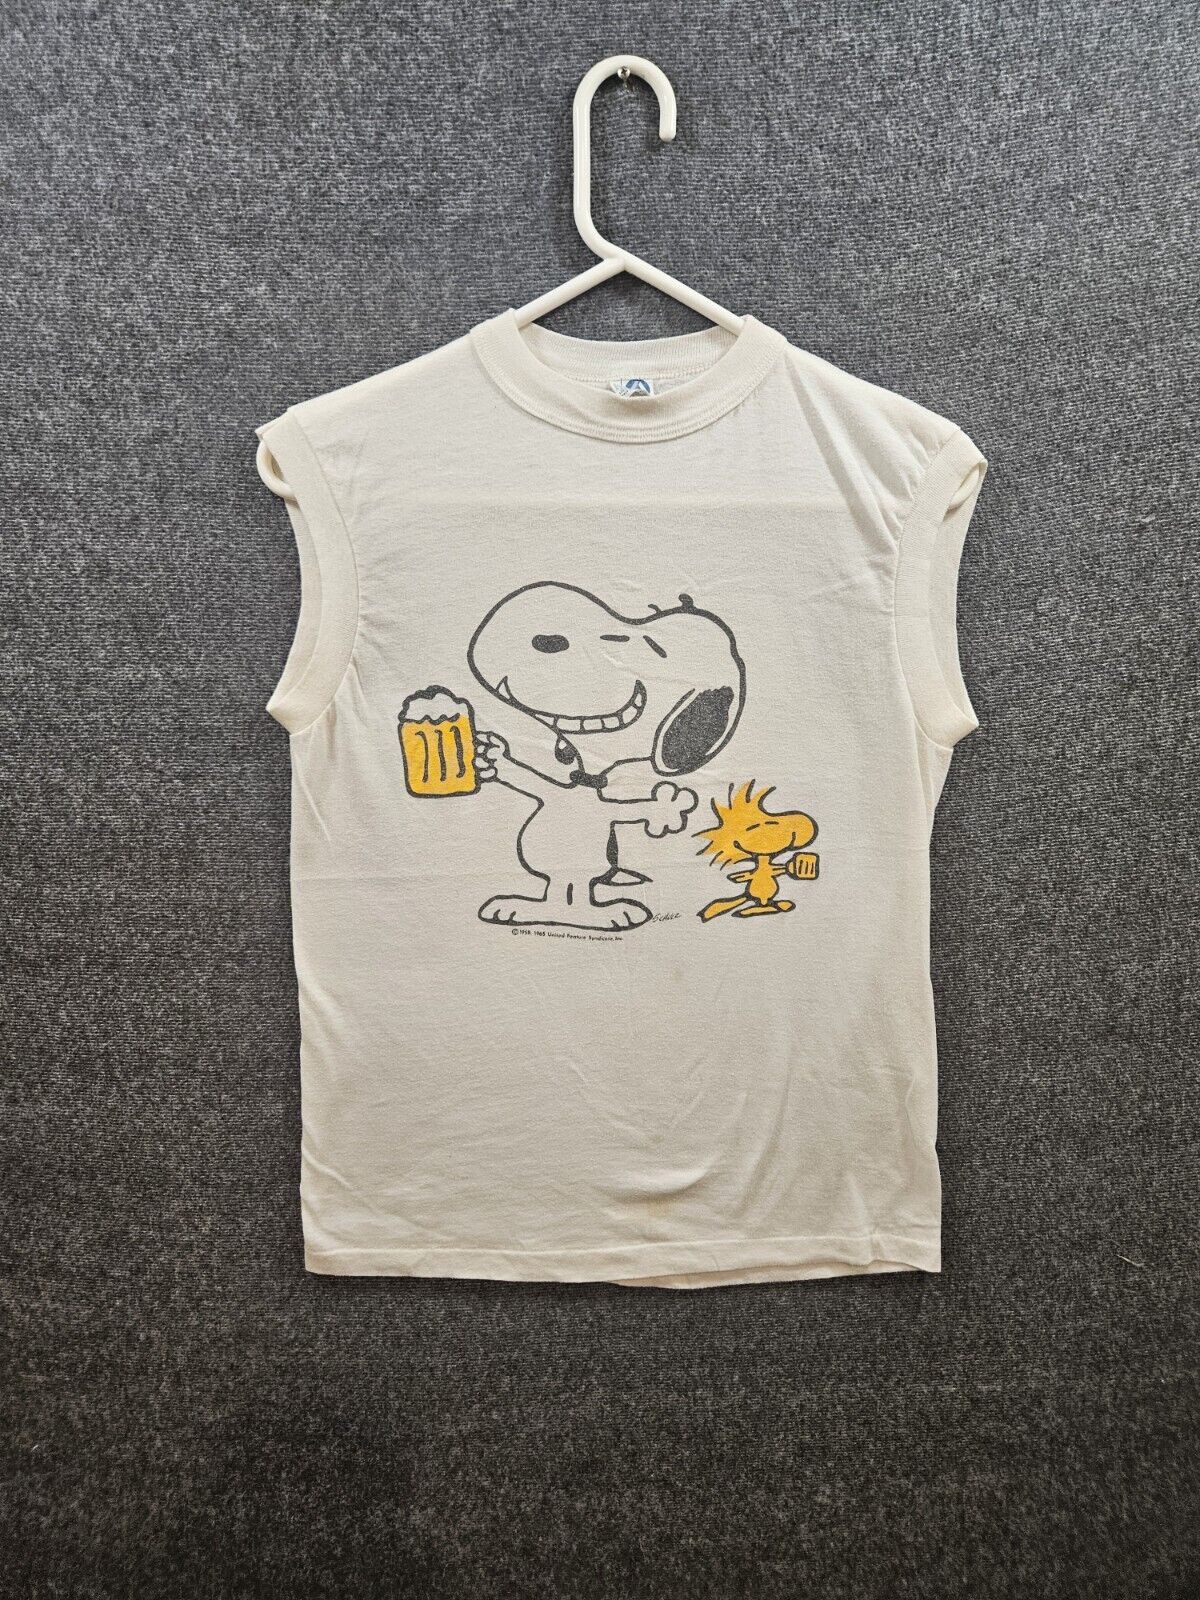 Vintage 1980s Snoopy Tank Top Shirt Artex Size Medium Used Condition 